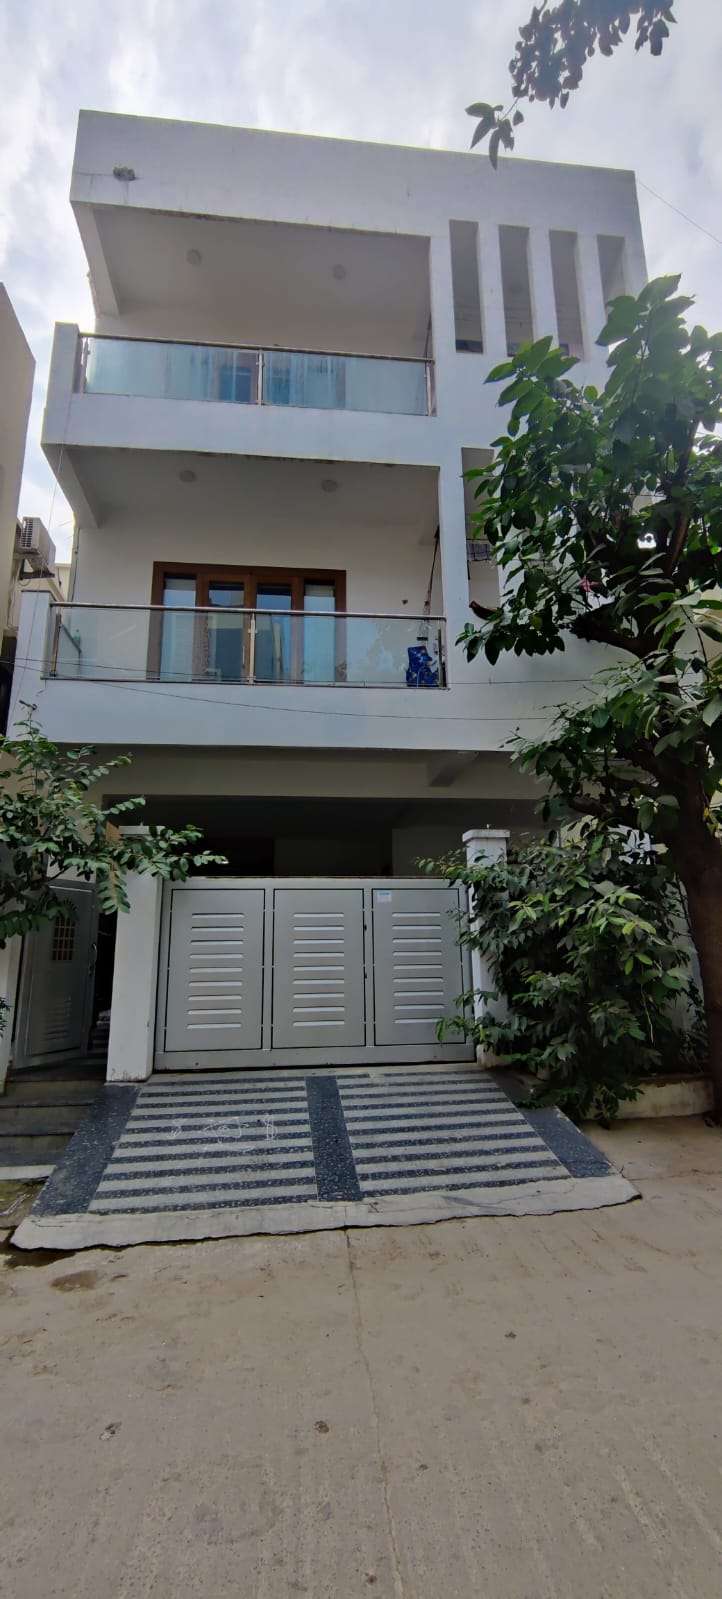 5 Bedroom 4100 Sq.Ft. Independent House in Tirumalagiri Hyderabad